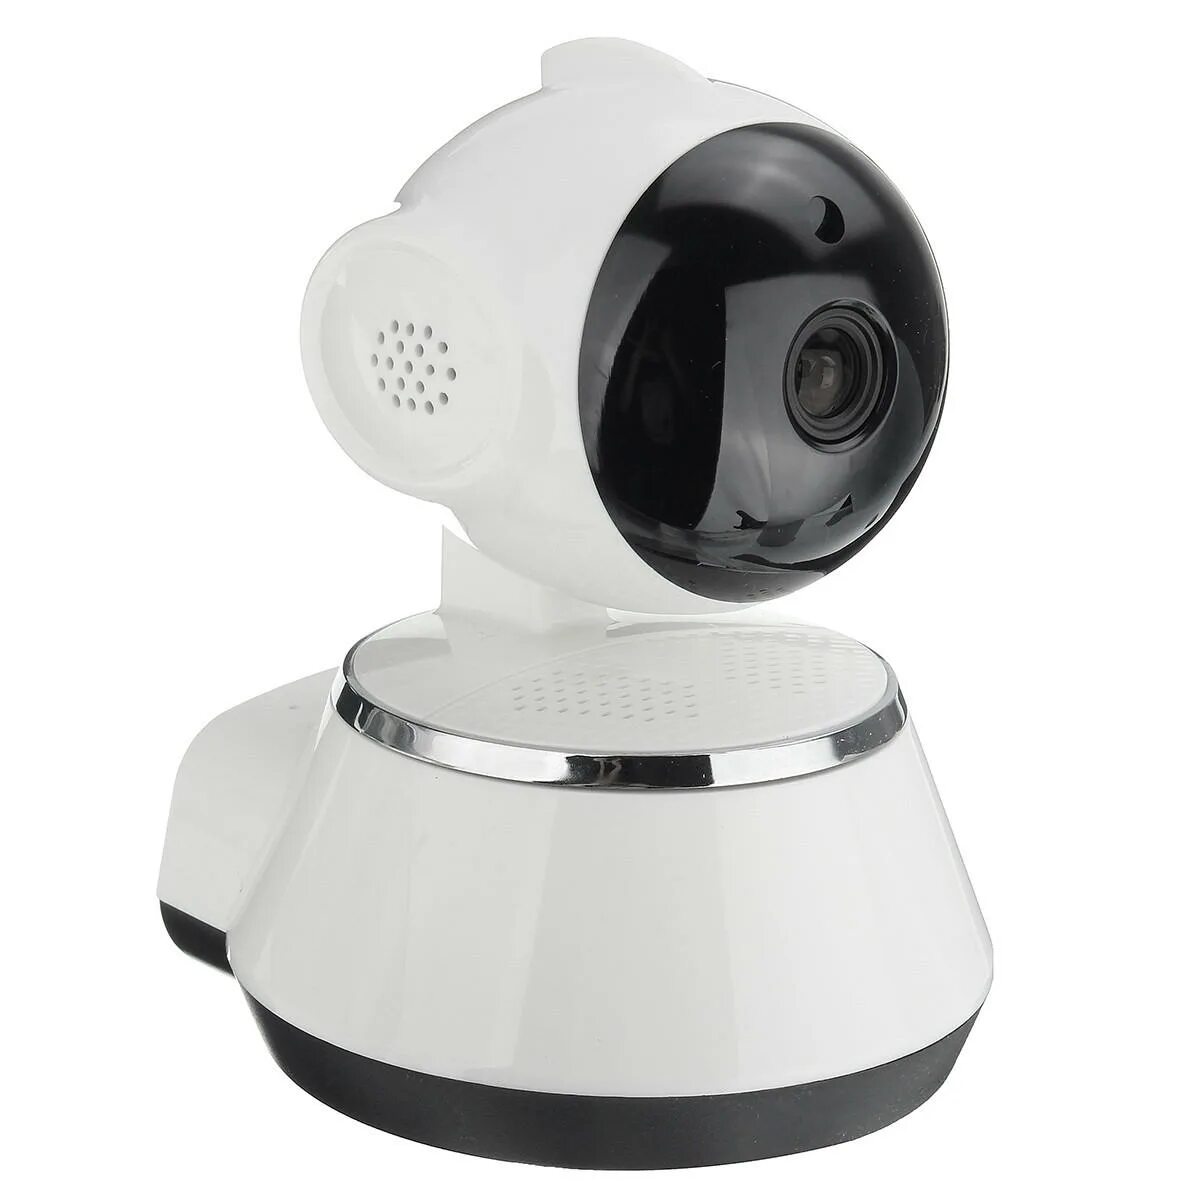 Wifi cam. IP-камера "WIFI Camera" HD (белая/коробка). PTZ-камера SMARTCAM a12r. Беспроводная 720p Pan Tilt Night Vision Network Главная. WIFI камера Vision.